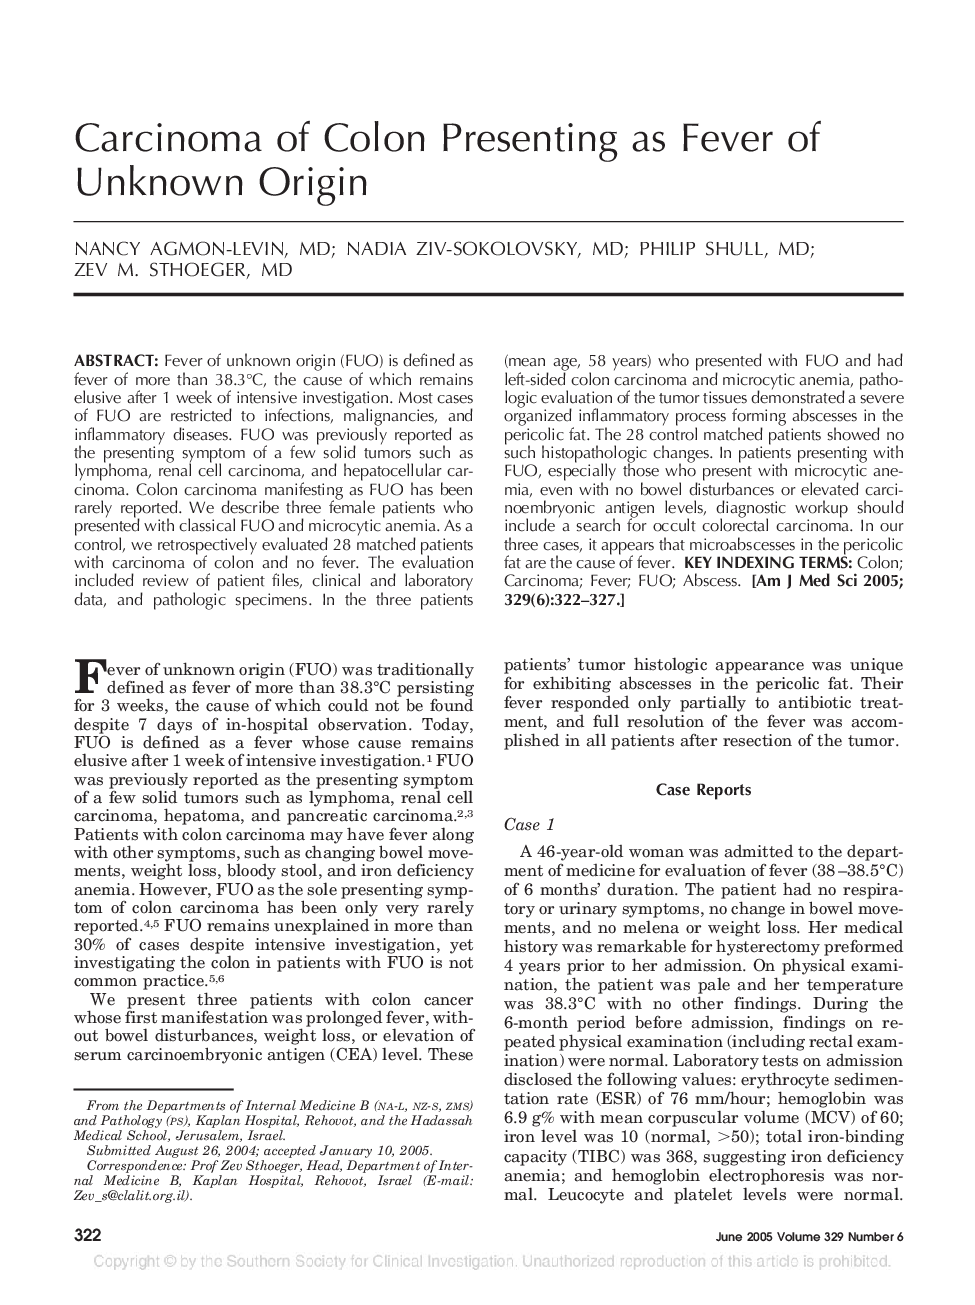 Carcinoma of Colon Presenting as Fever of Unknown Origin